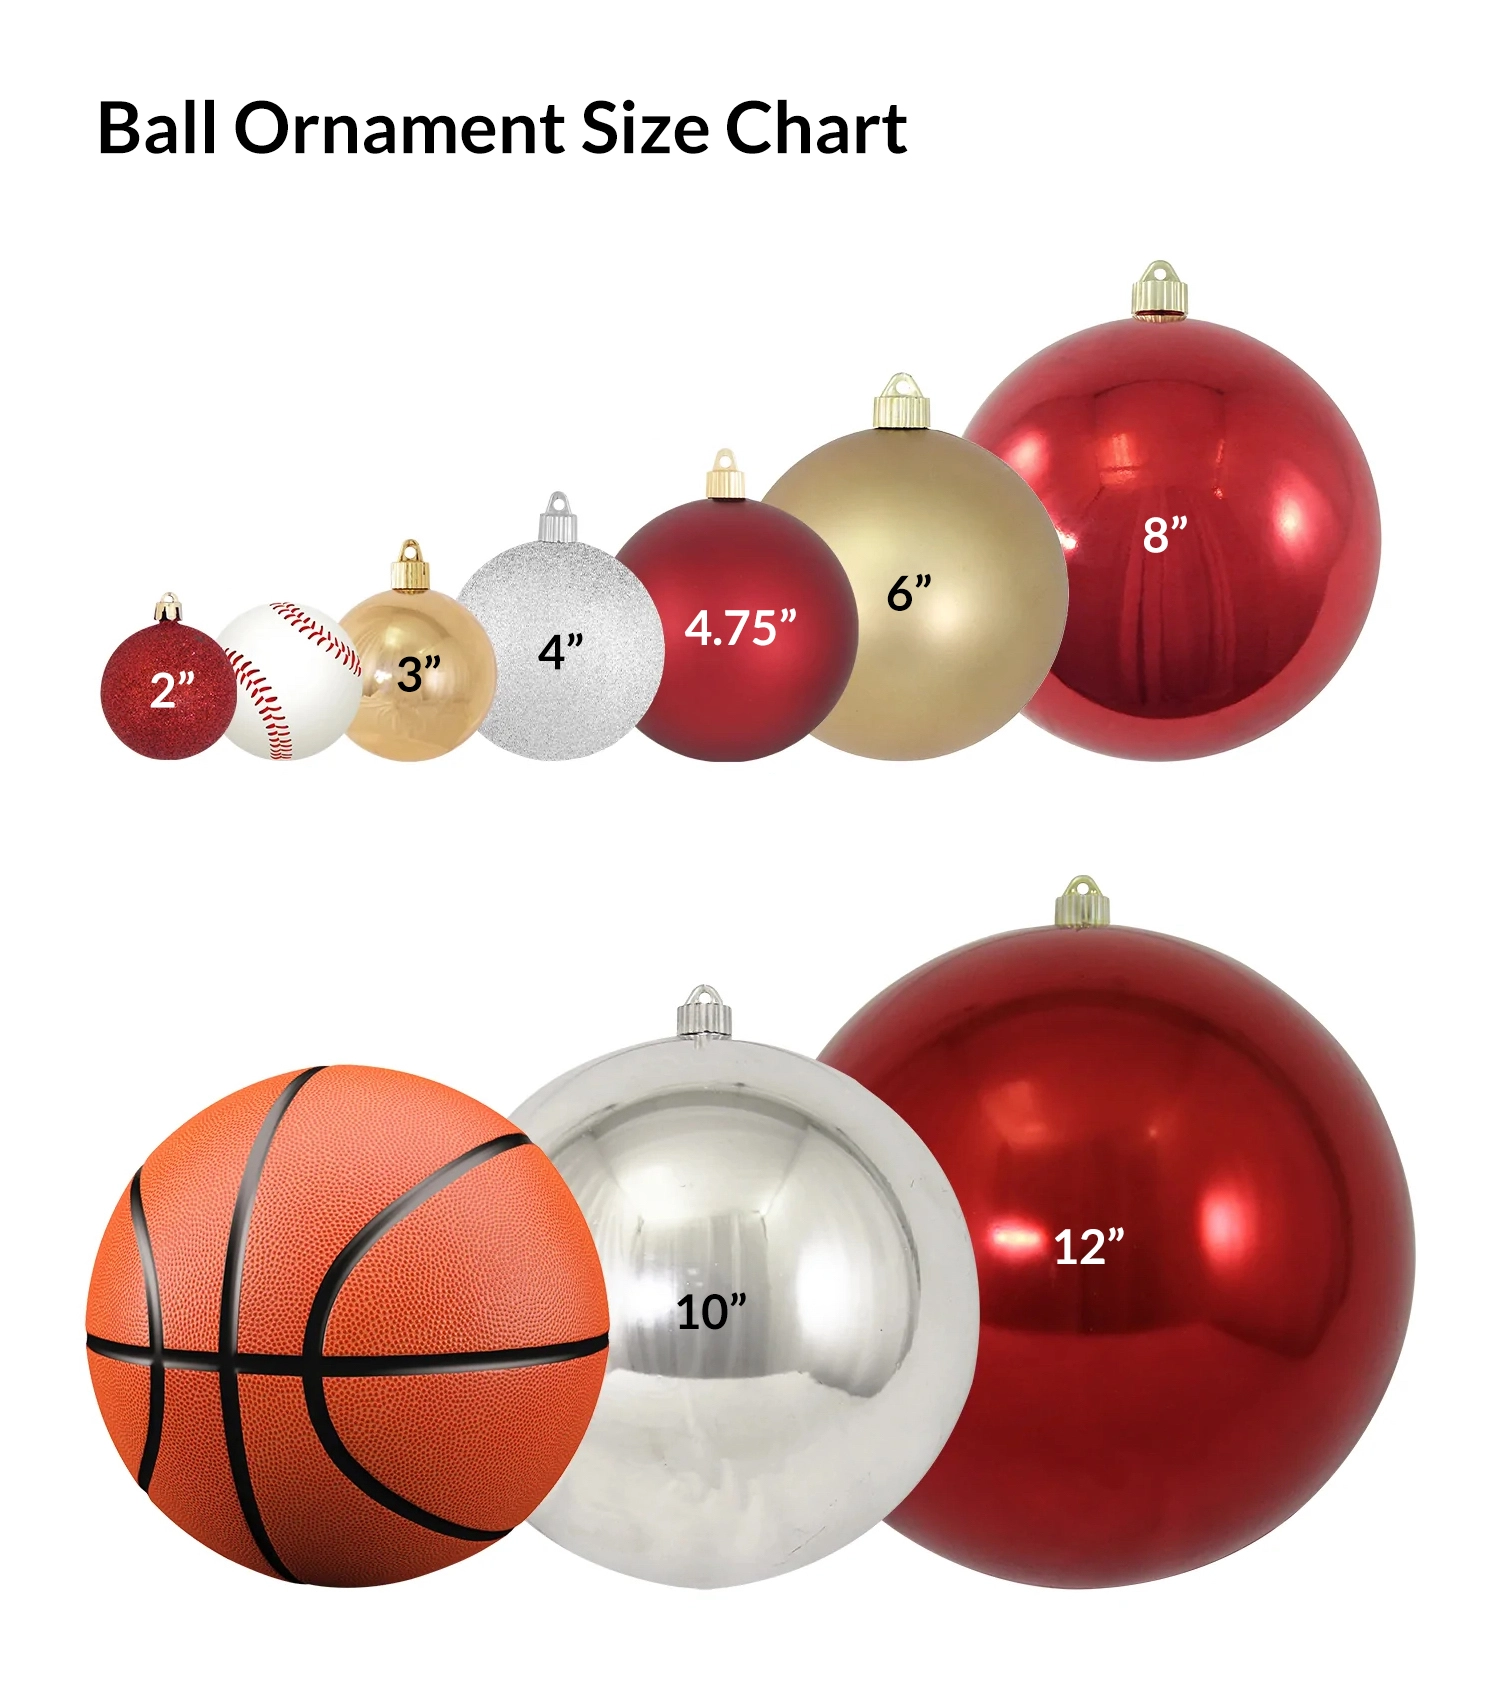 Ball Ornament Size Chart